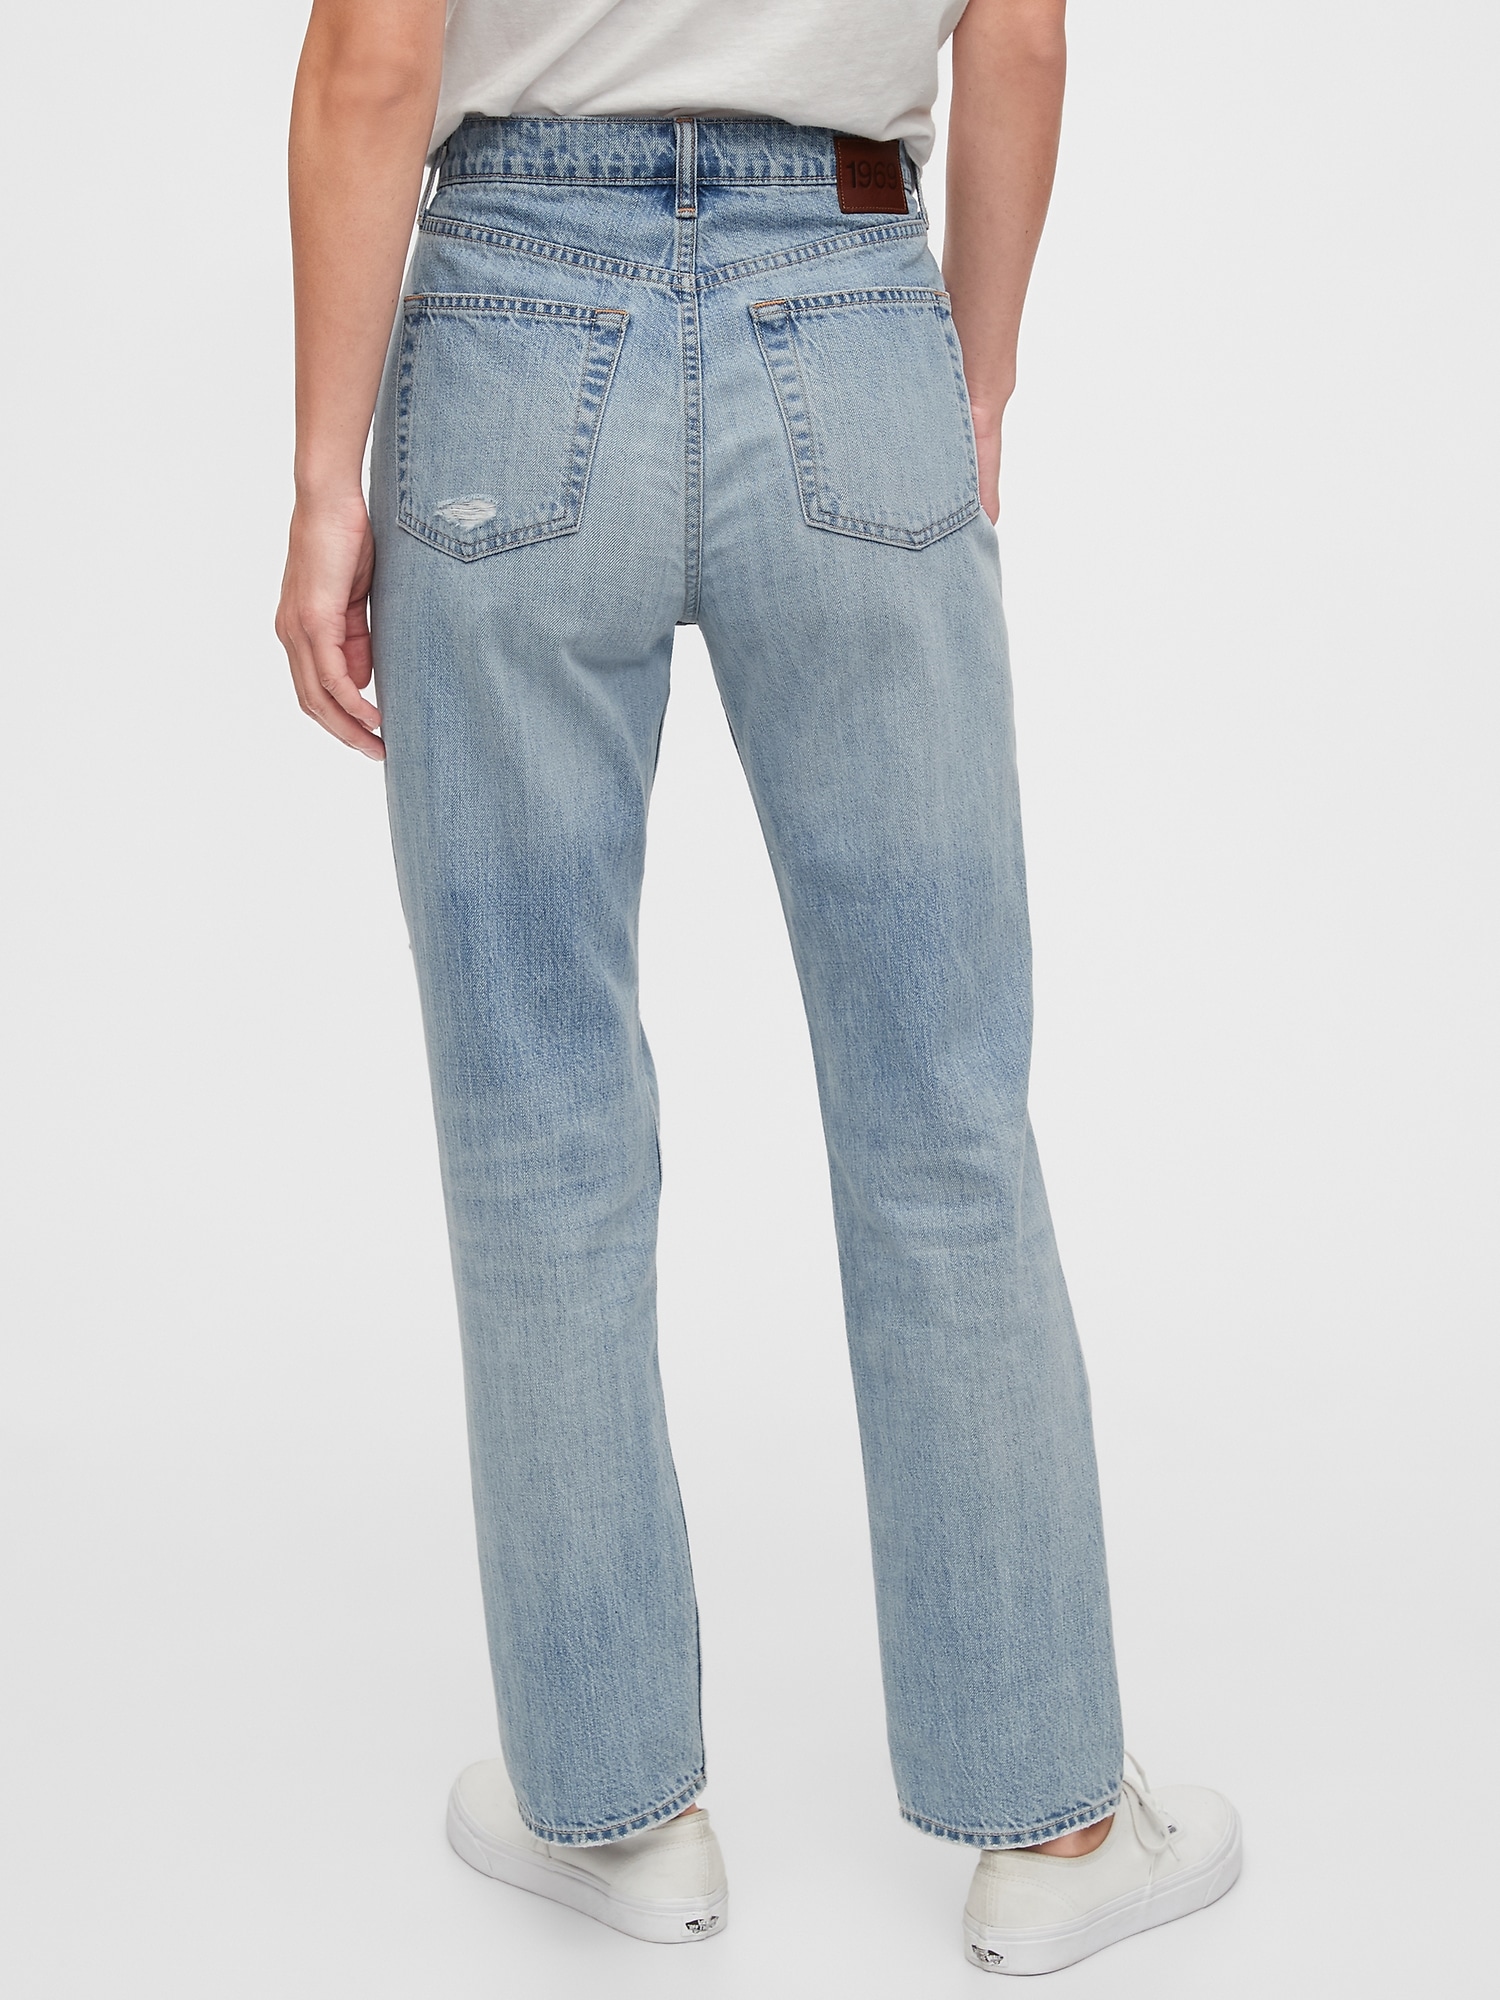 gap 1969 straight leg jeans